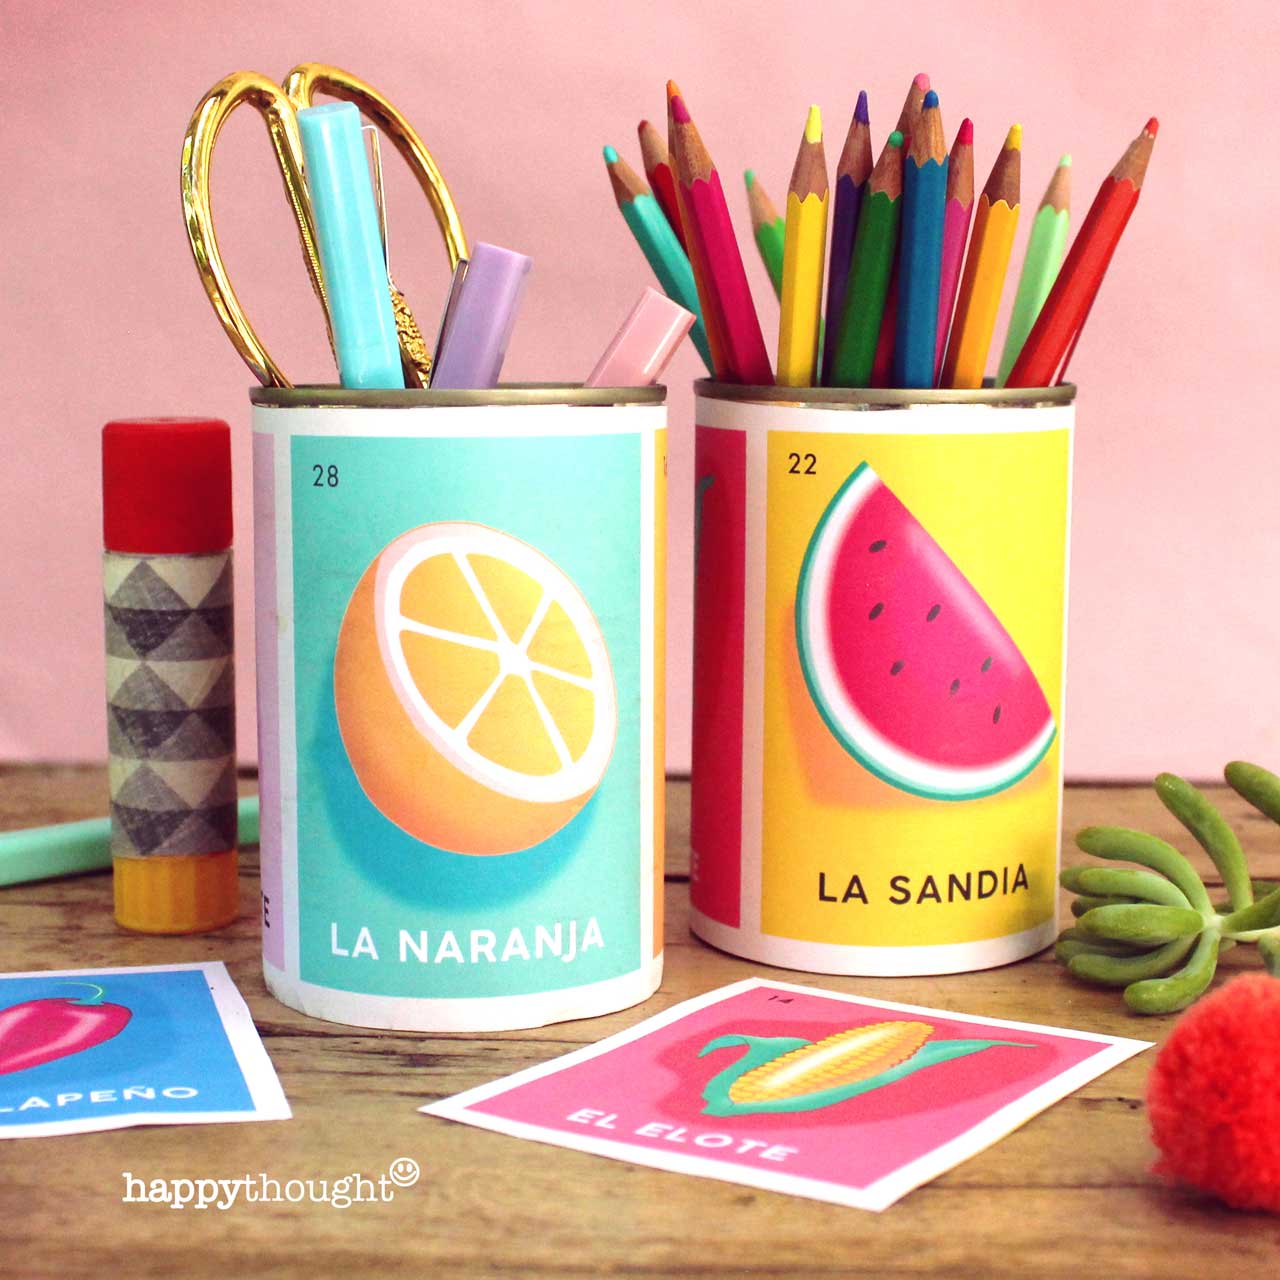 Loteria design pen pots: Sandia, Aguacate, Jalepeño, Naranja, Piña and Elote.